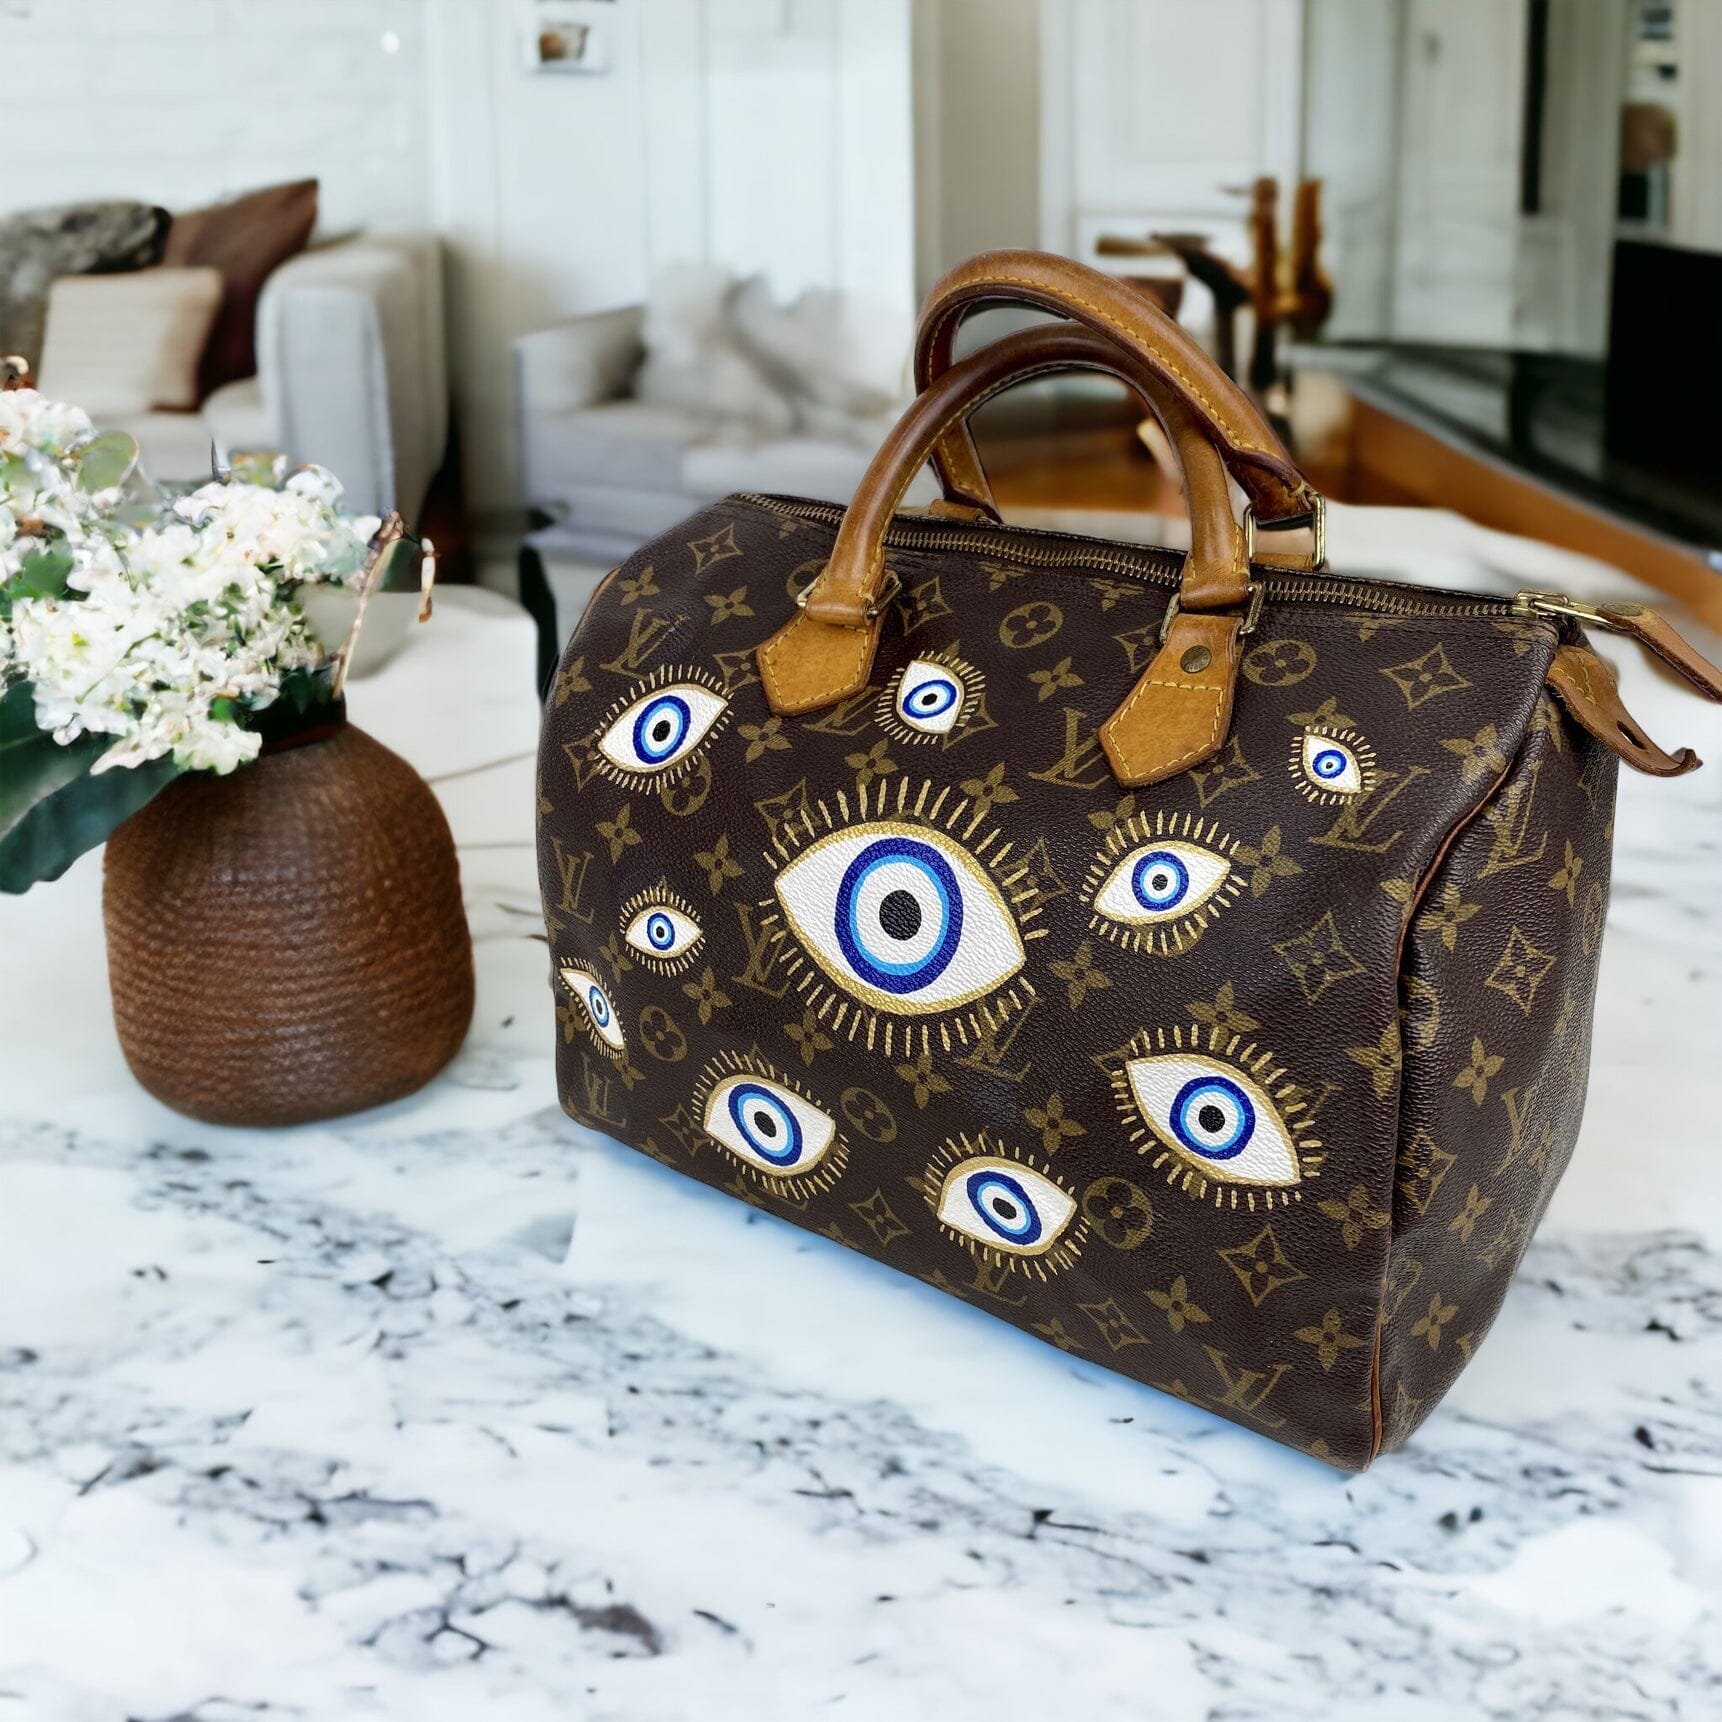 Where can I get cheap Louis Vuitton handbags? - Quora